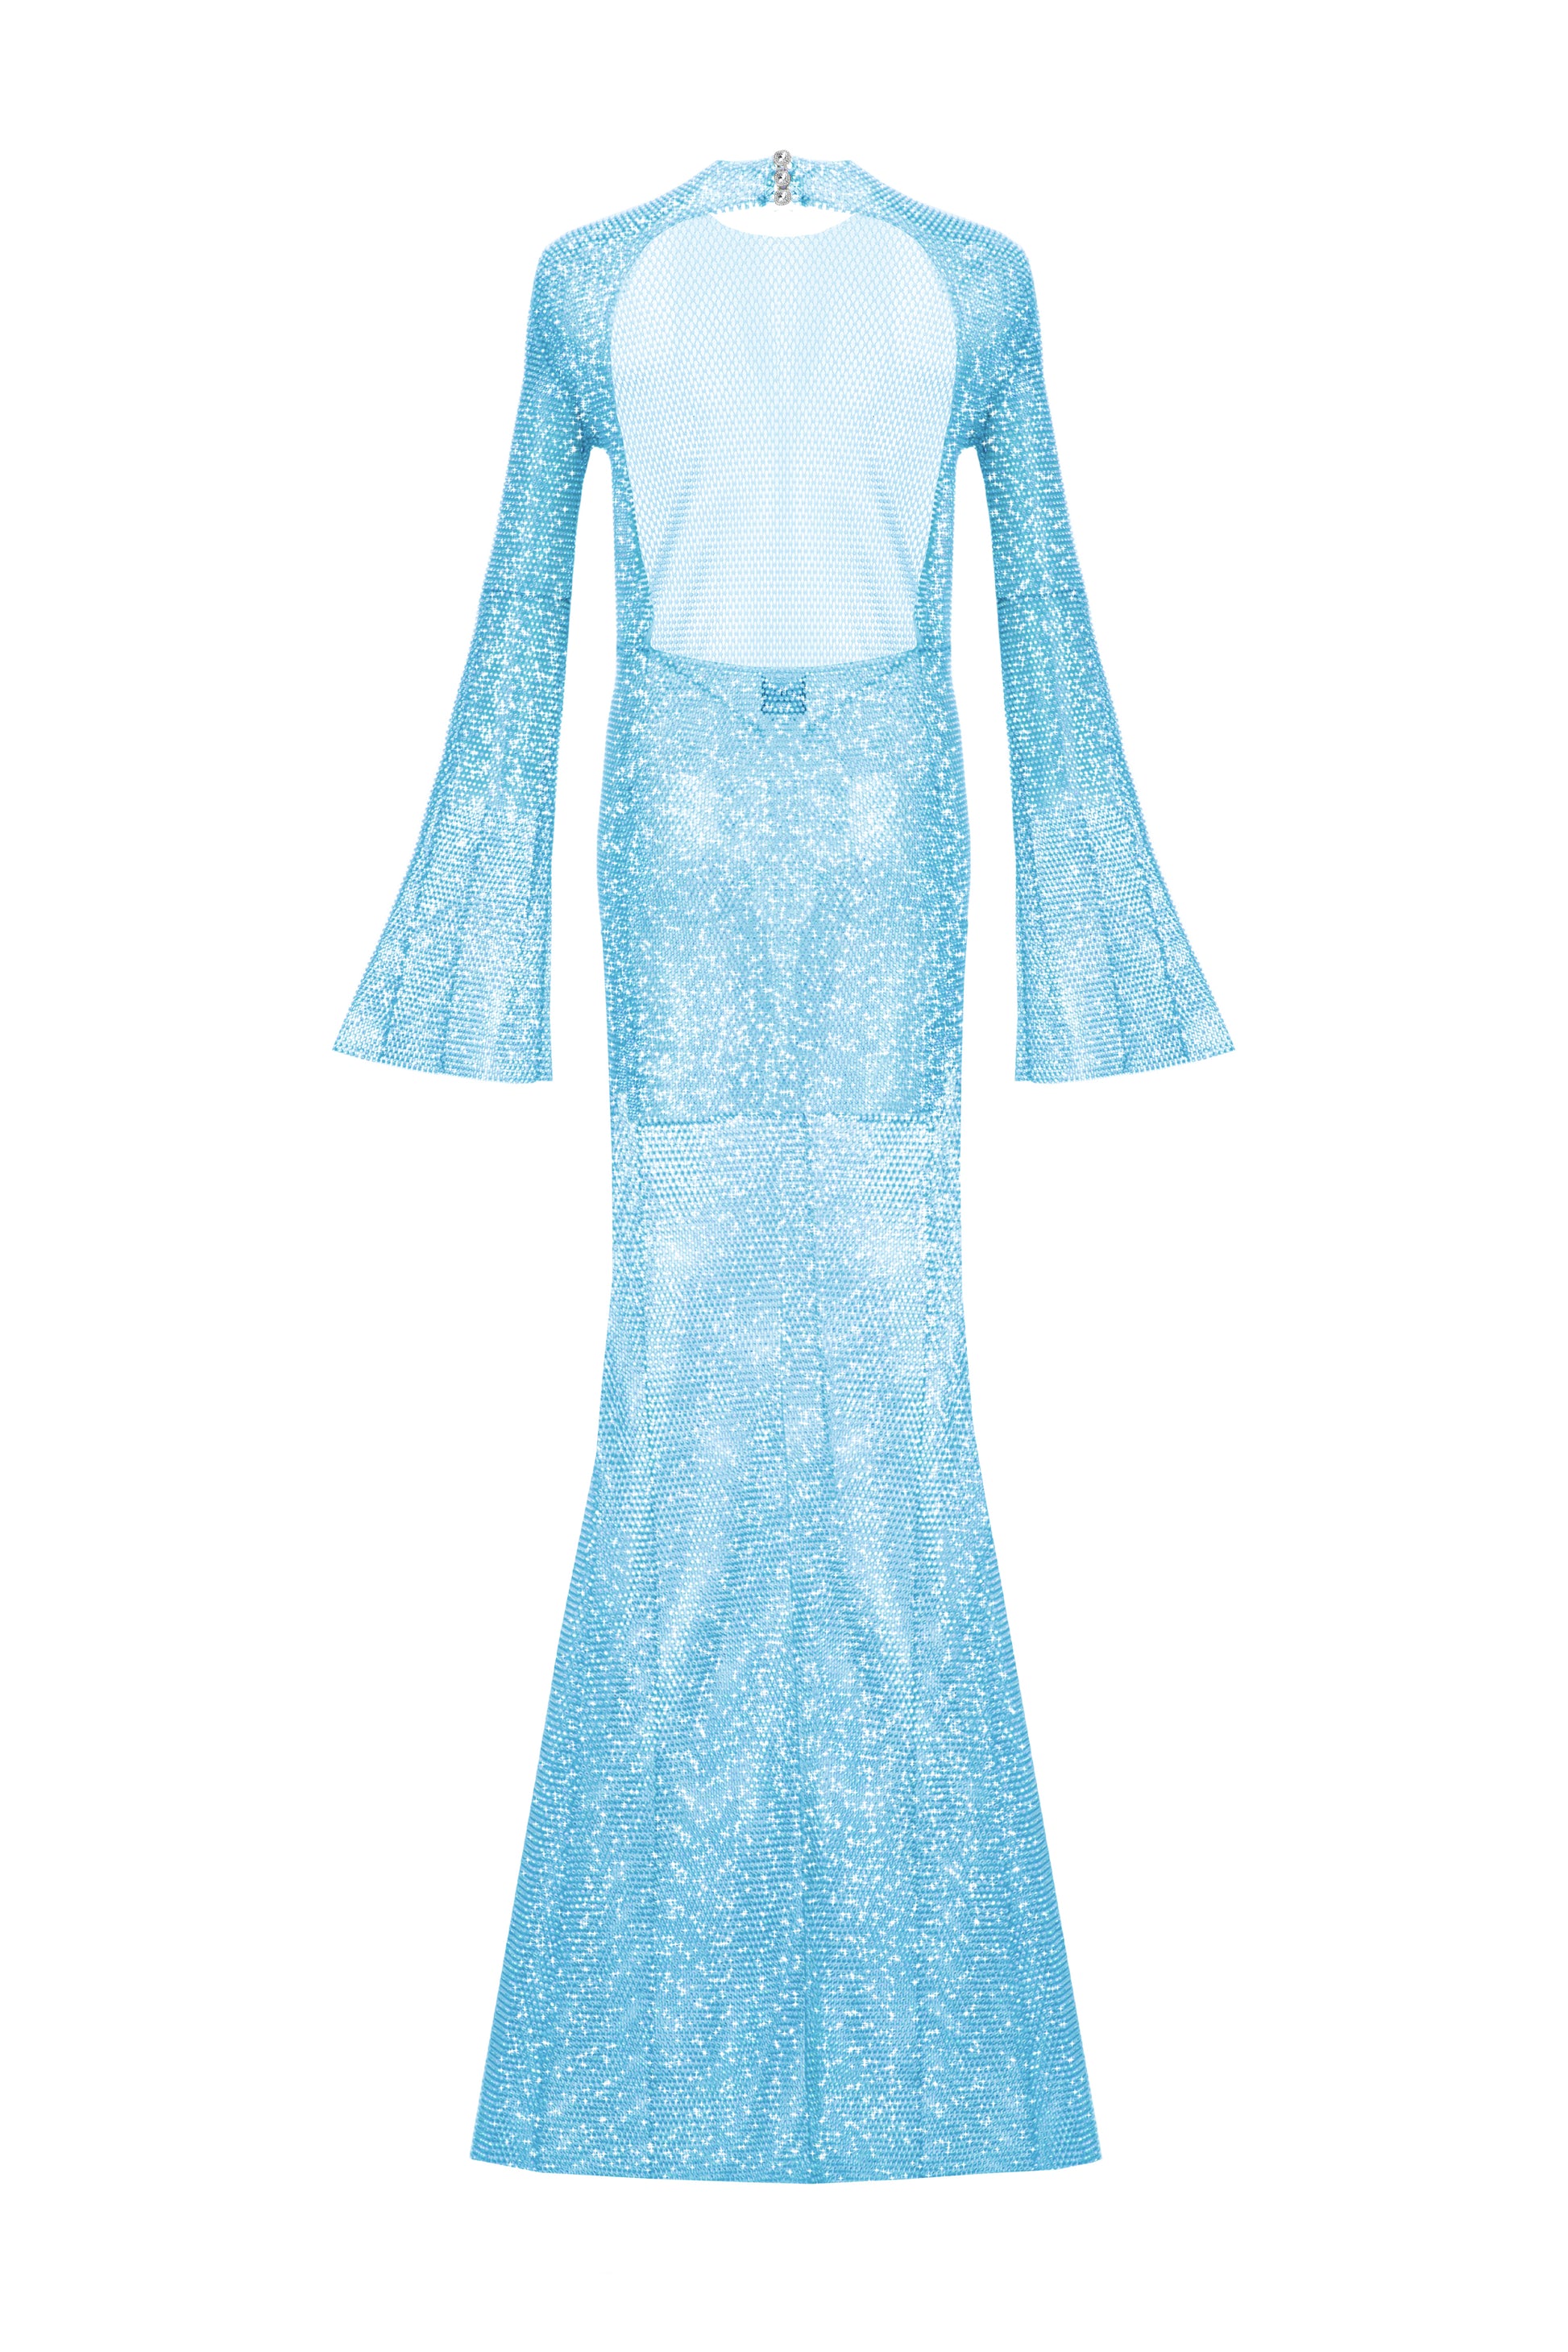 SANTA Crystal Maxi Flared Dress with Open Back - Light Blue back